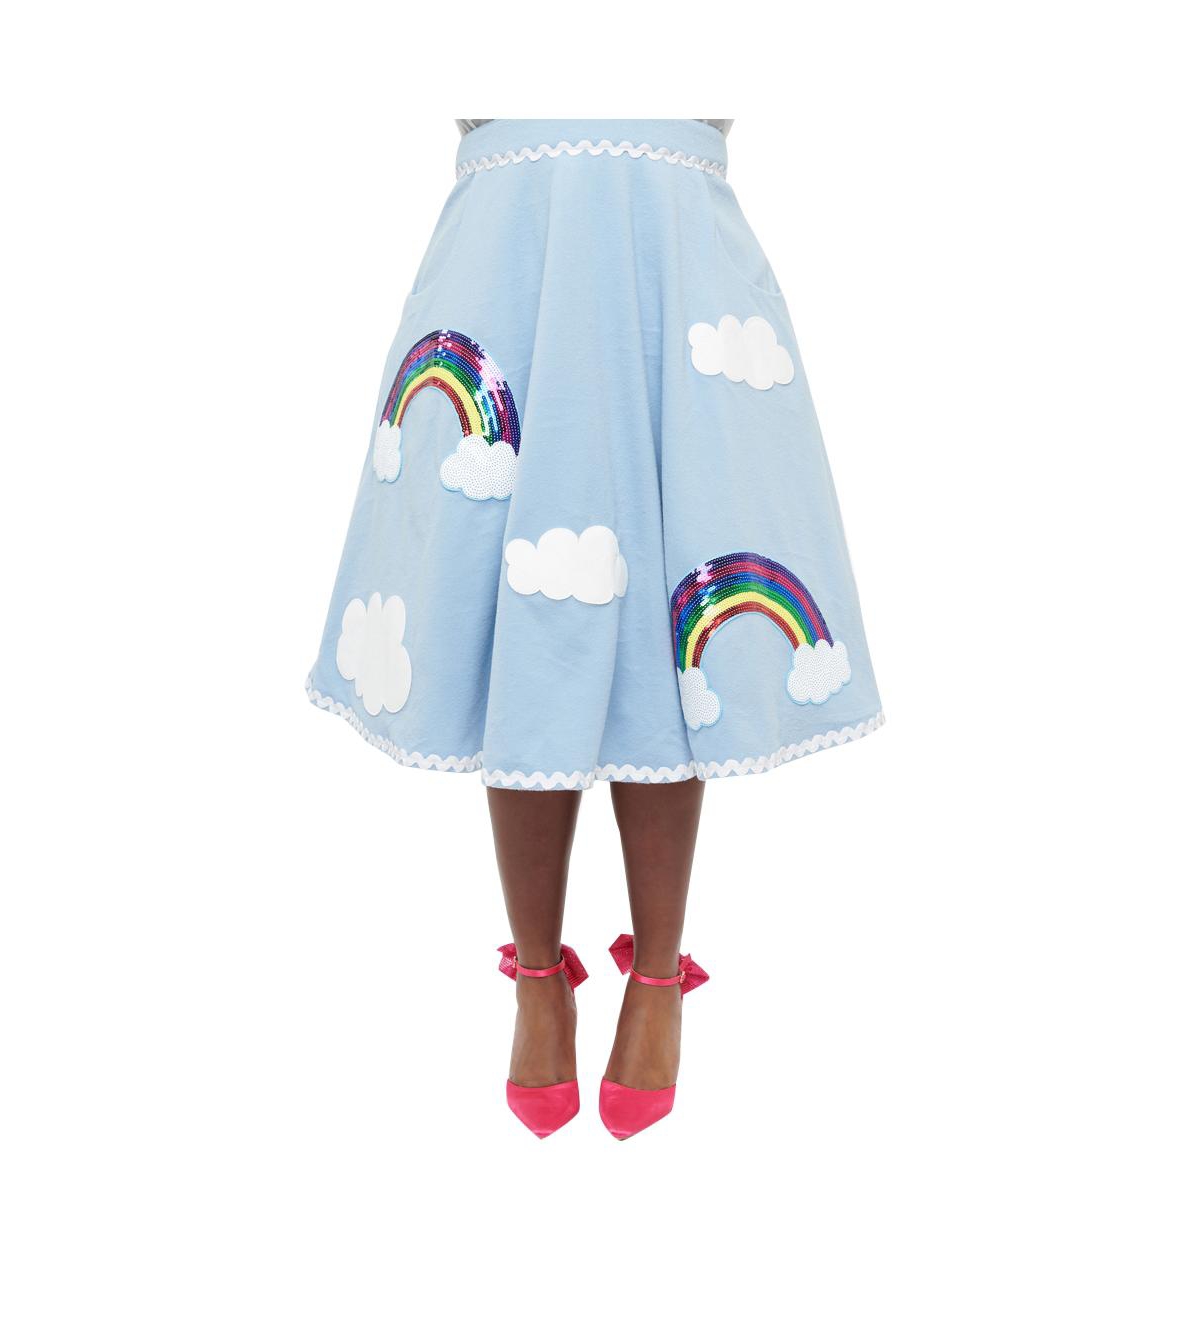 Plus Size 1950s Soda Shop Swing Skirt - Light blue  rainbow sequin